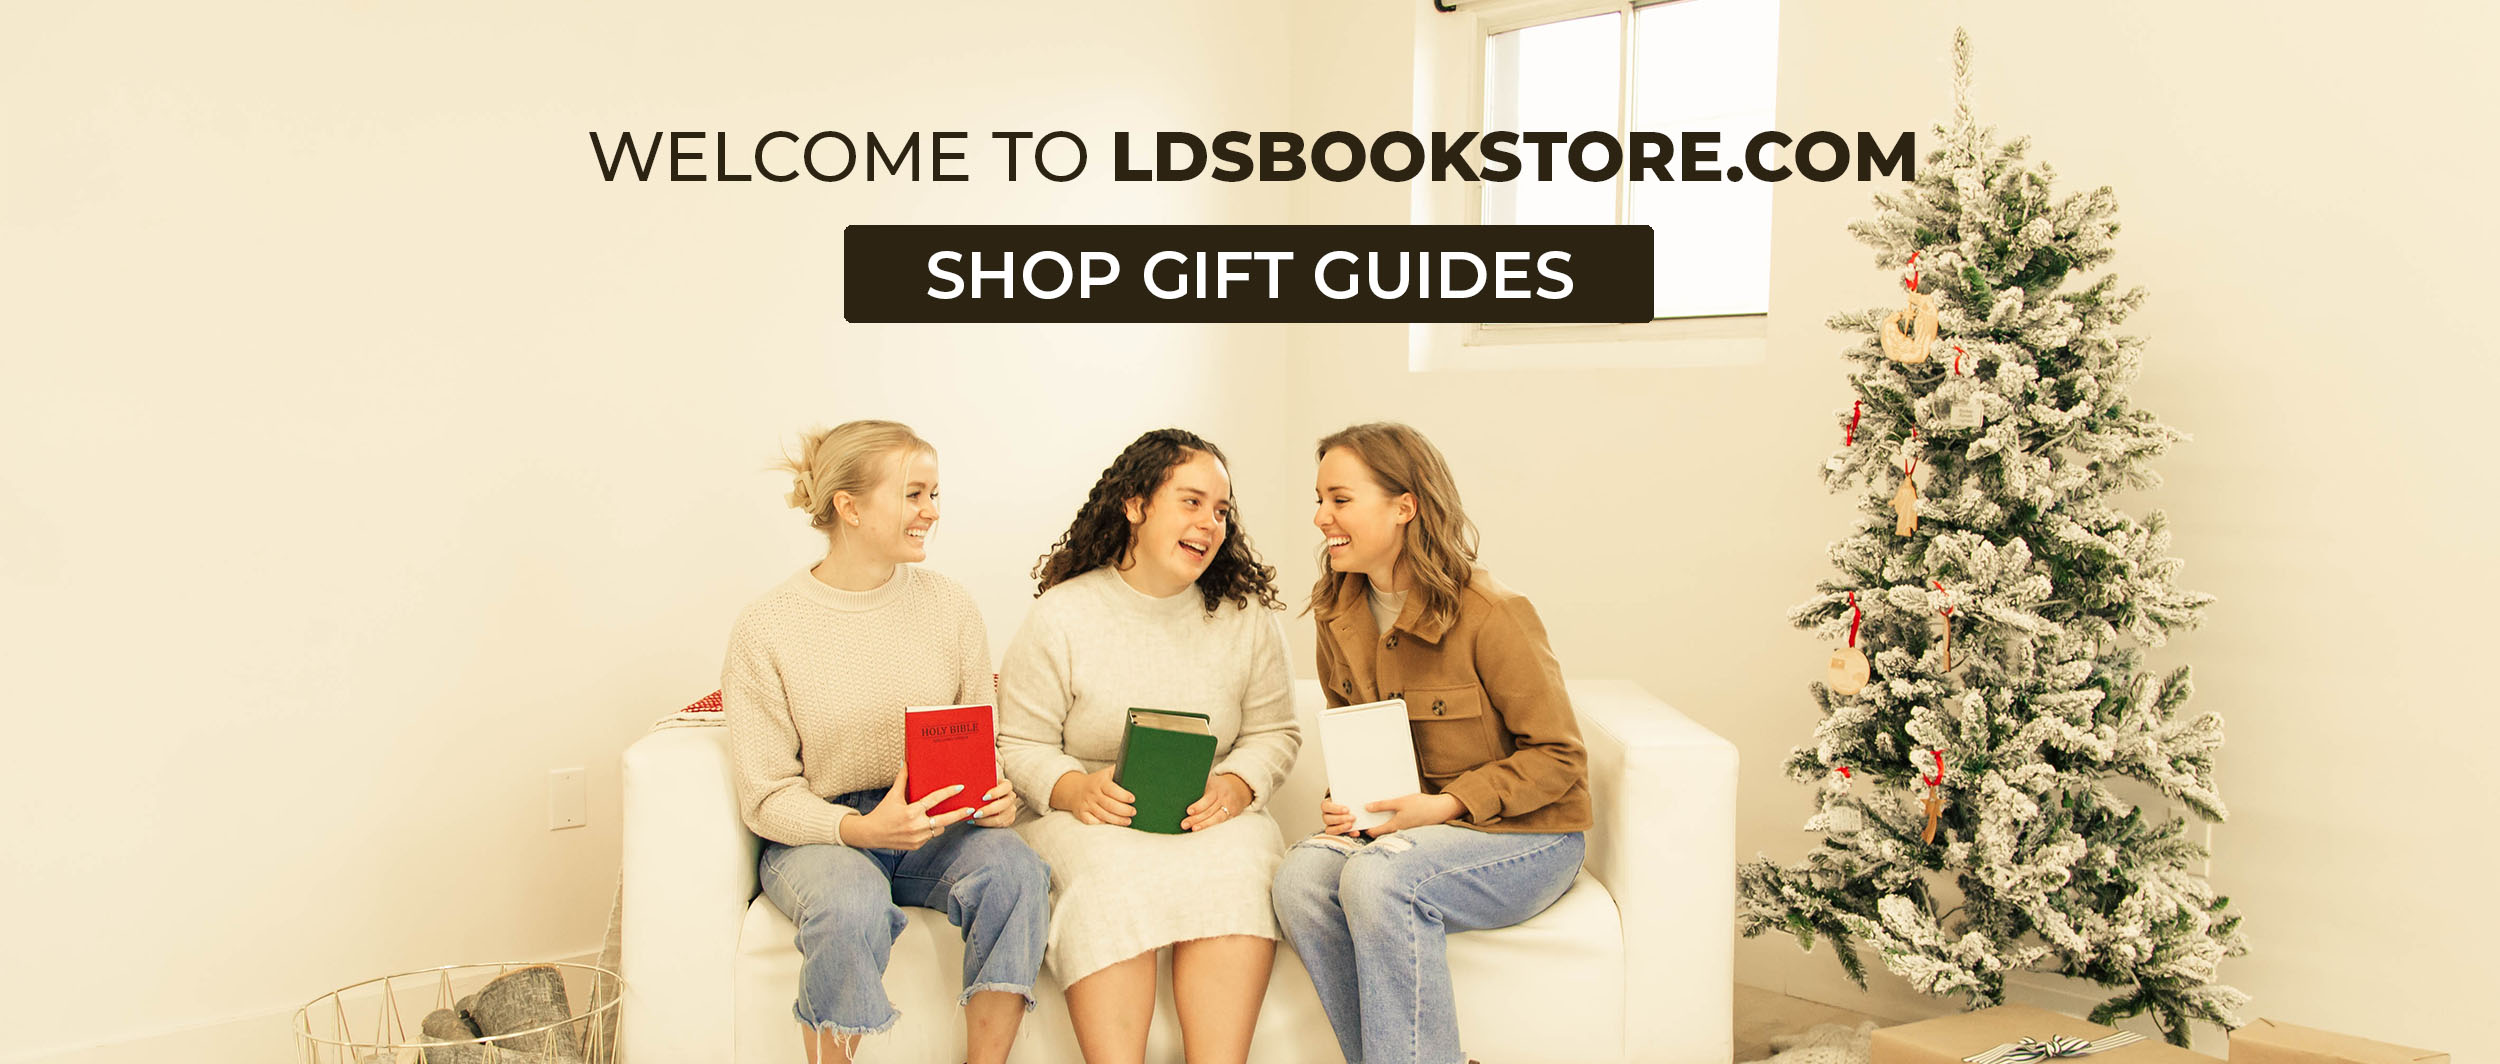 Welcome to LDSBookstore.com